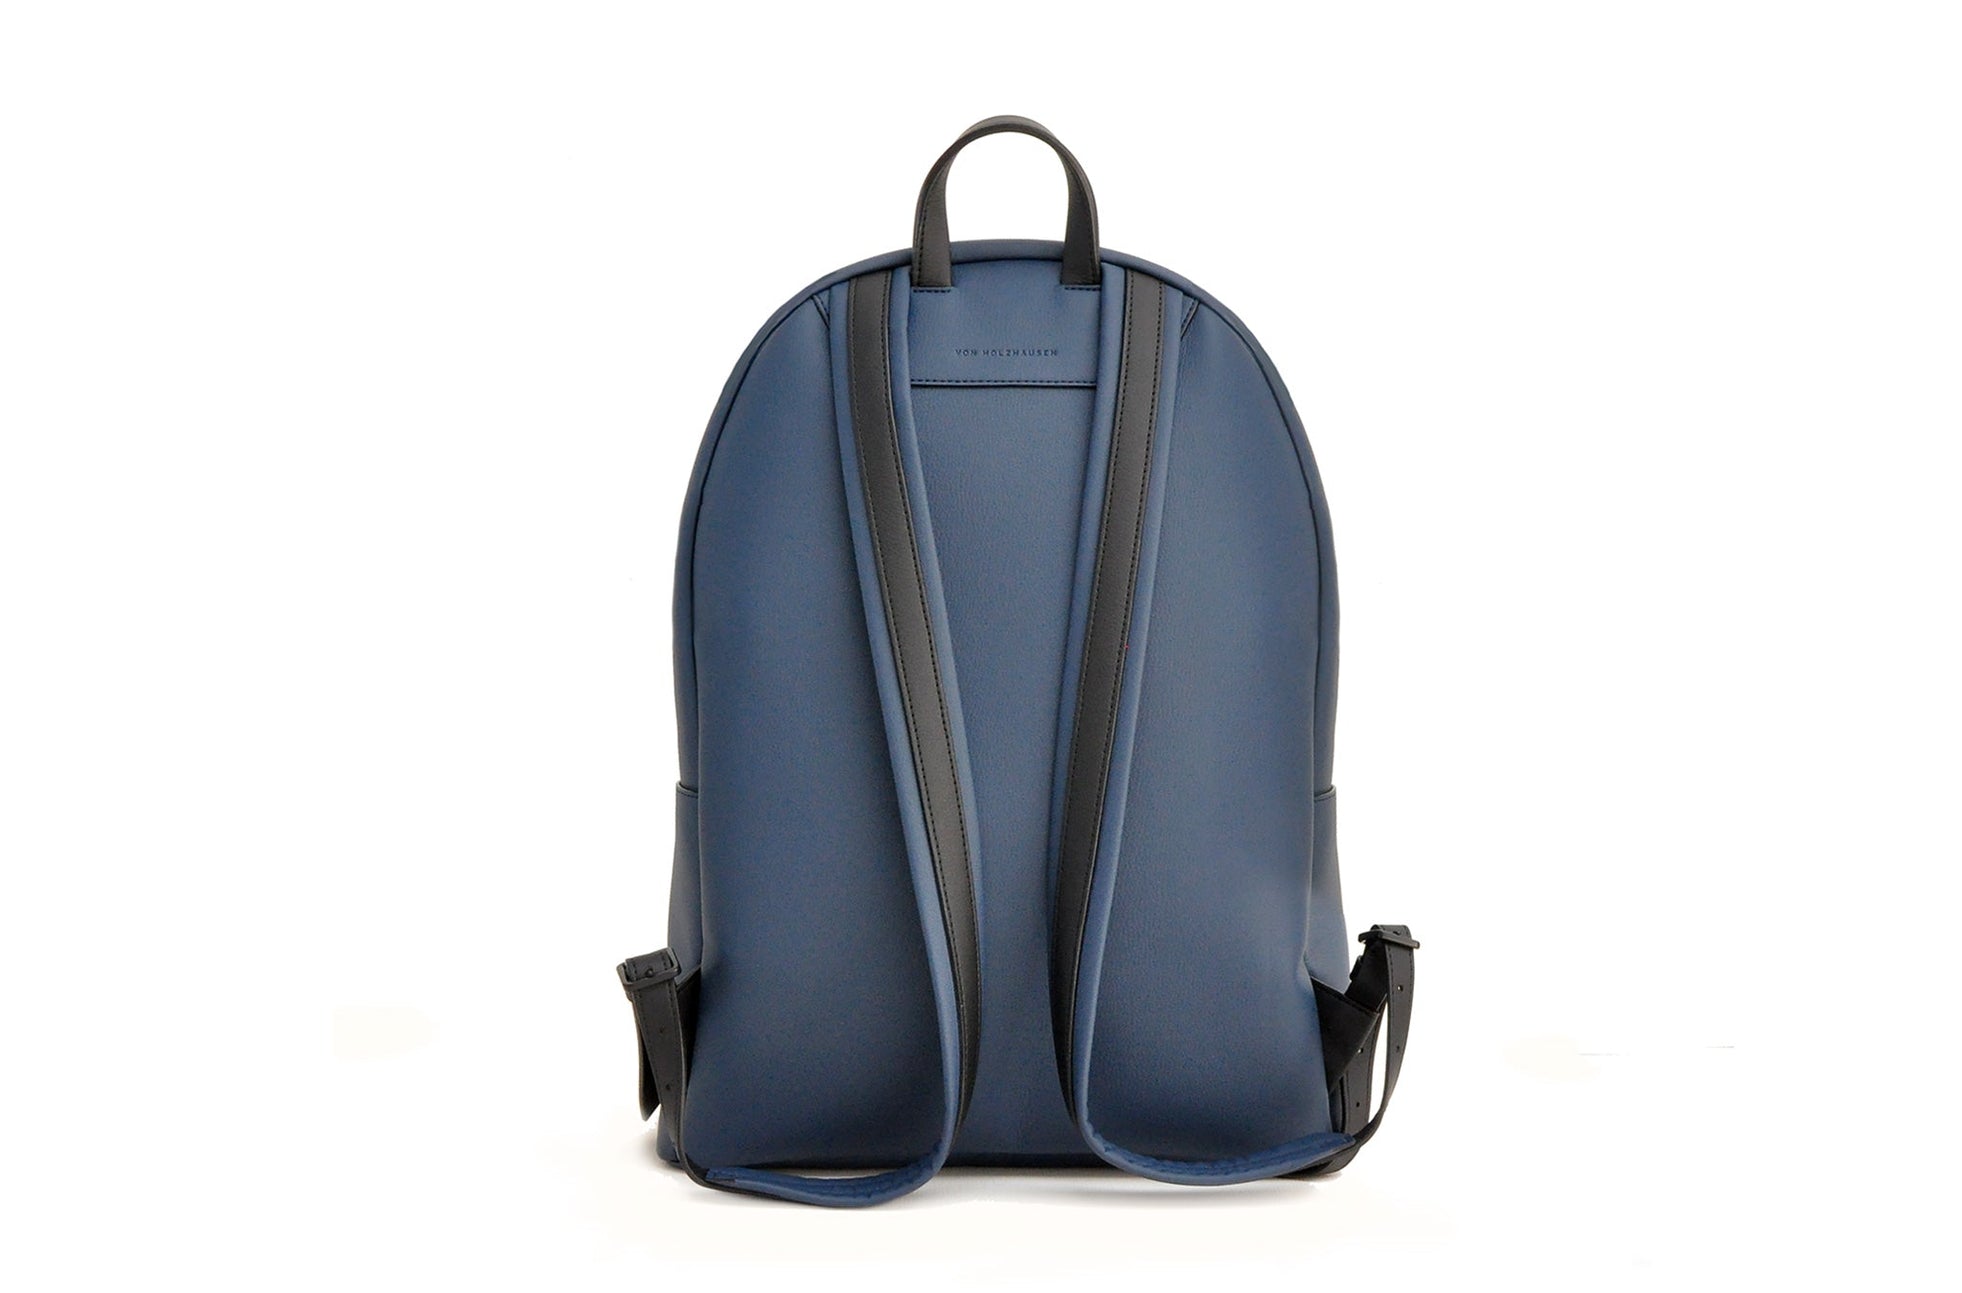 The Classic Backpack - Sample Sale in Technik in Denim and Black image 4